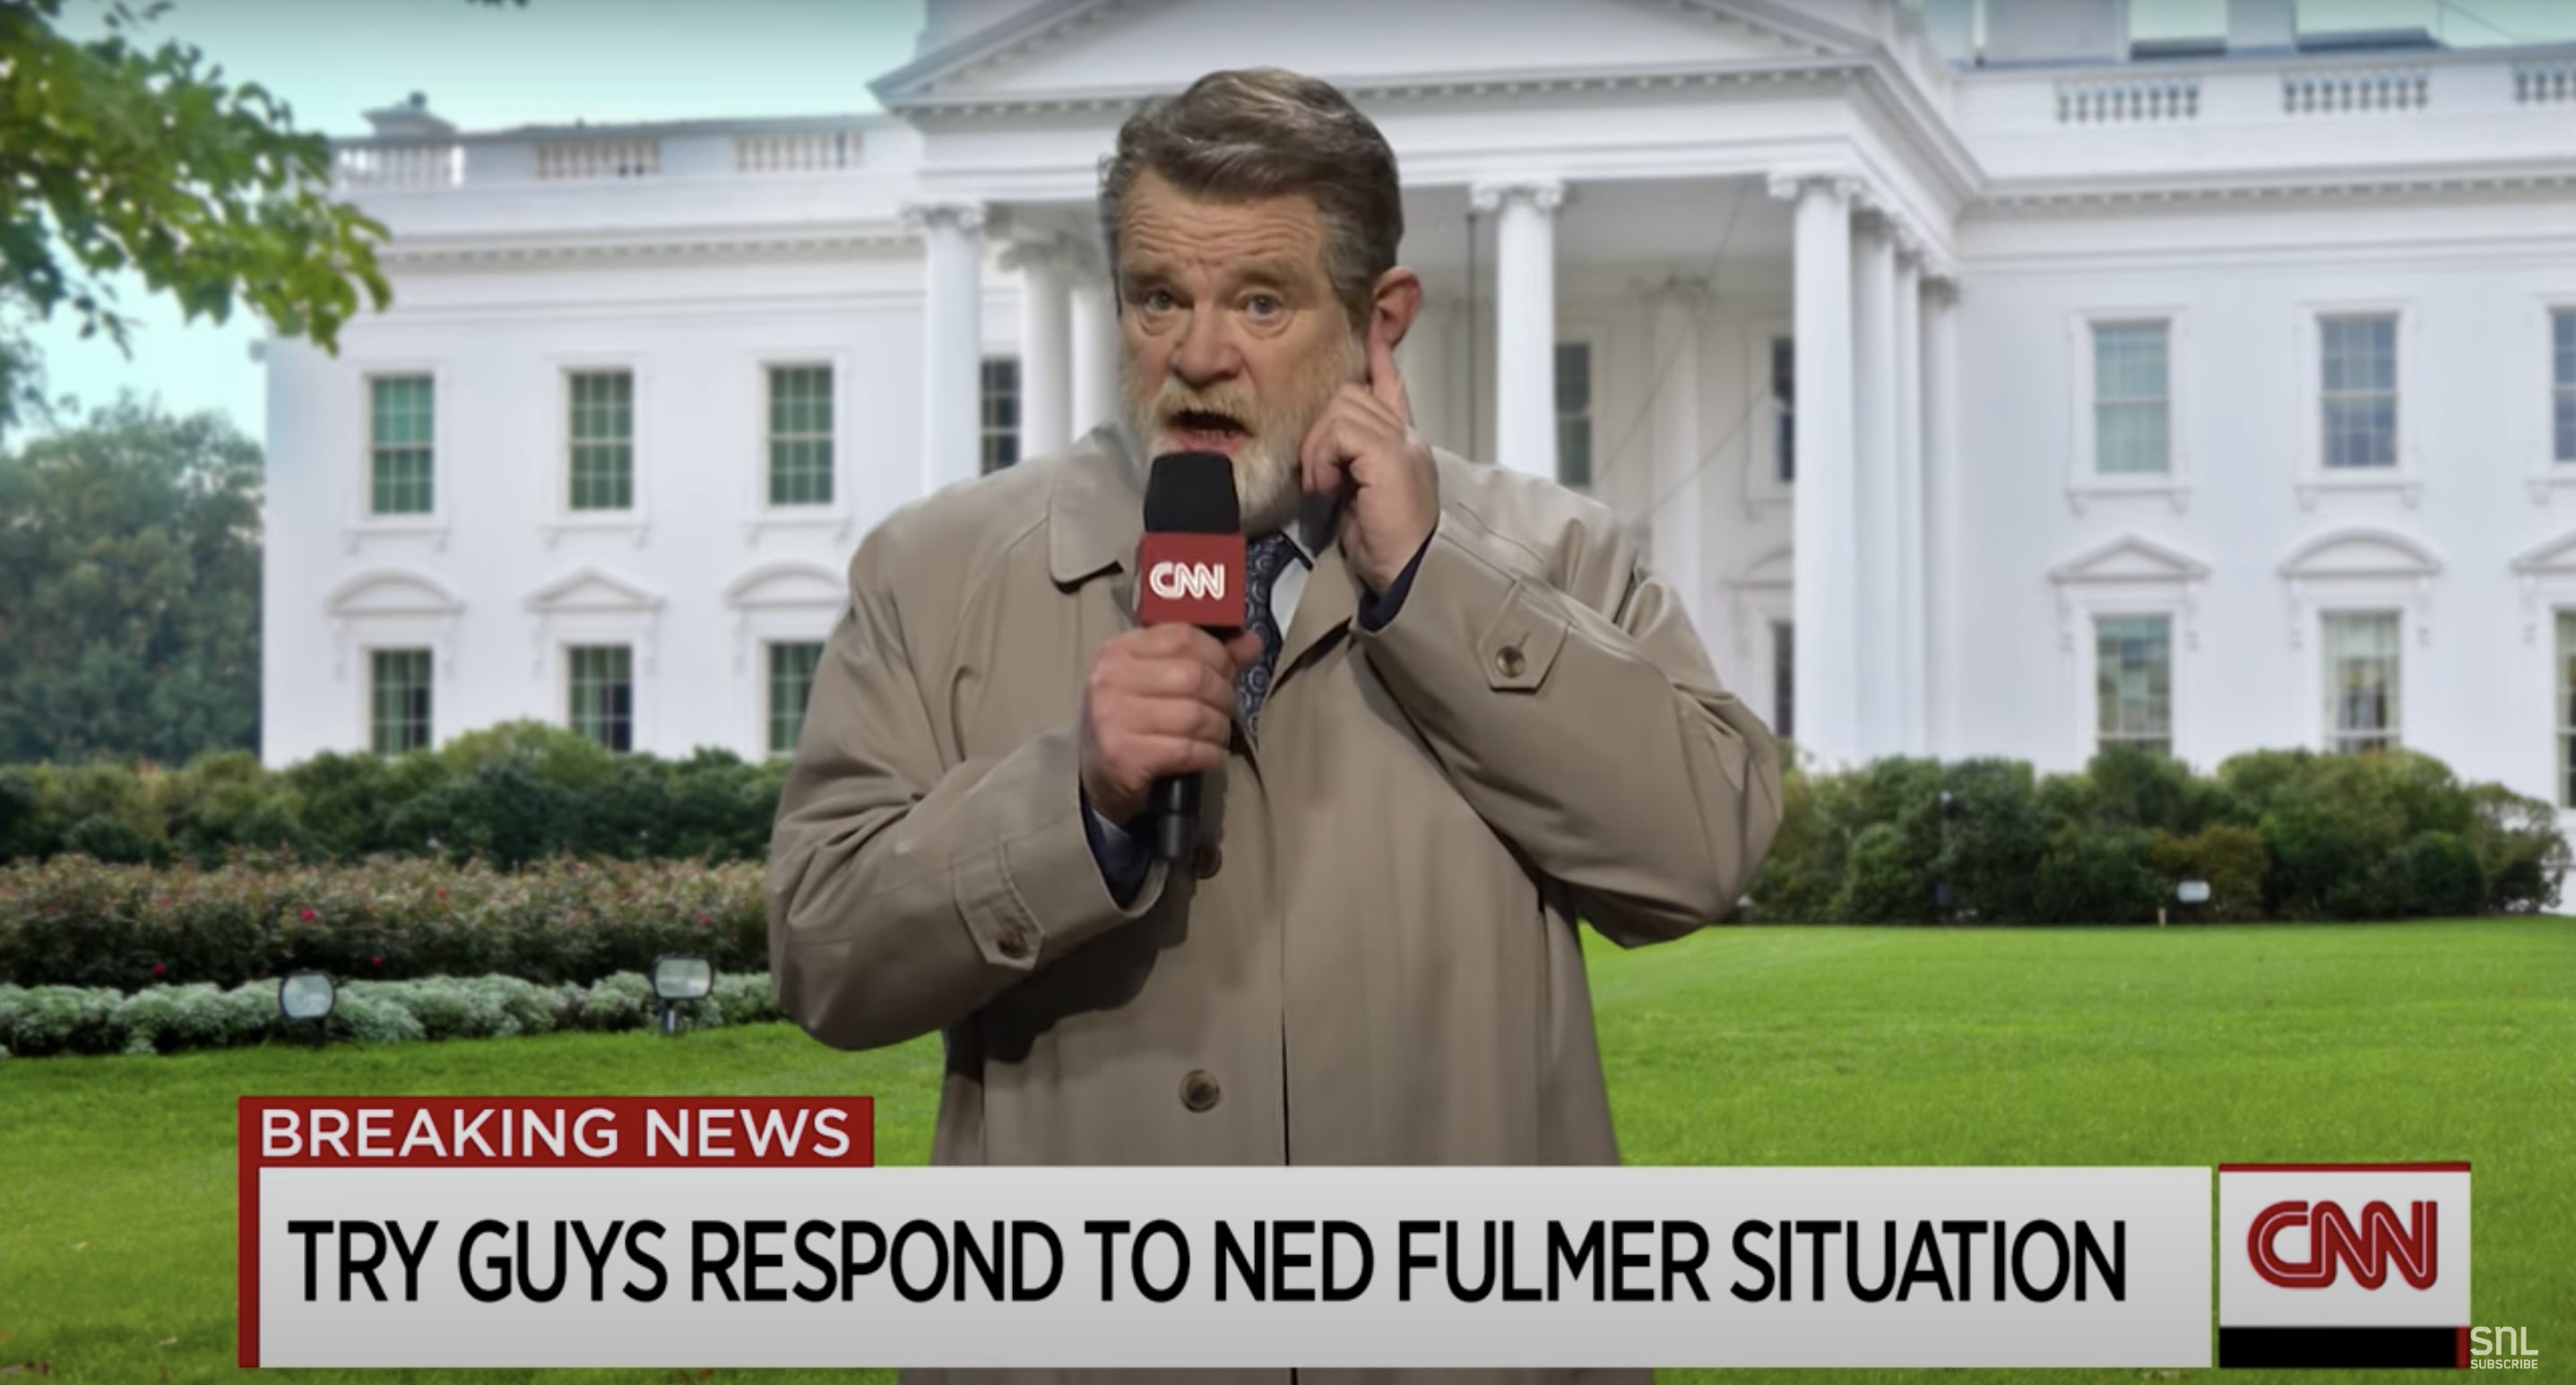 Brendan as a CNN host reporting breaking news